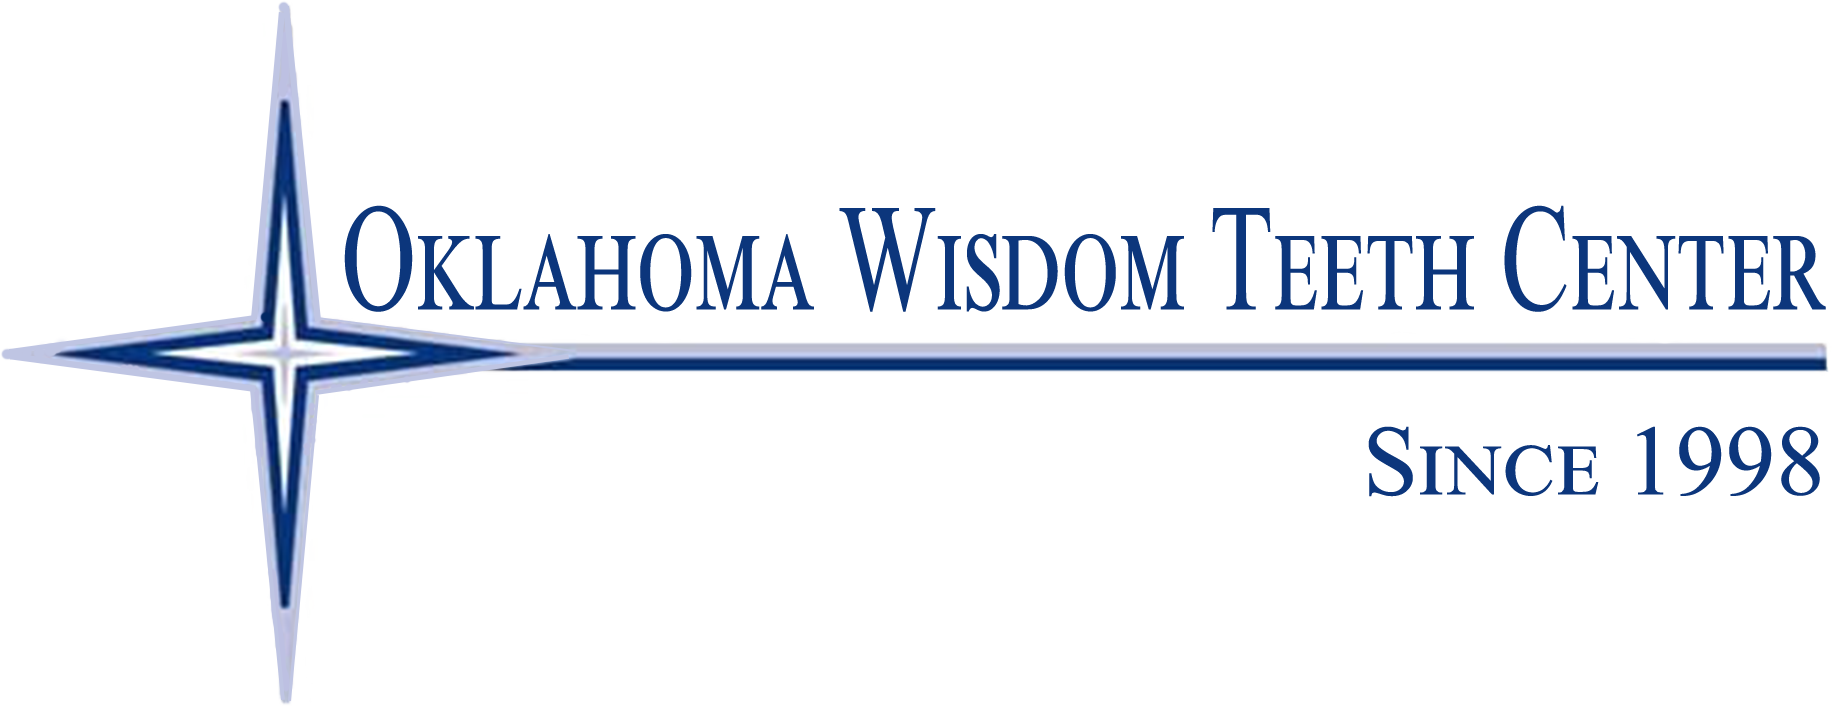 Oklahoma Wisdom Teeth Center